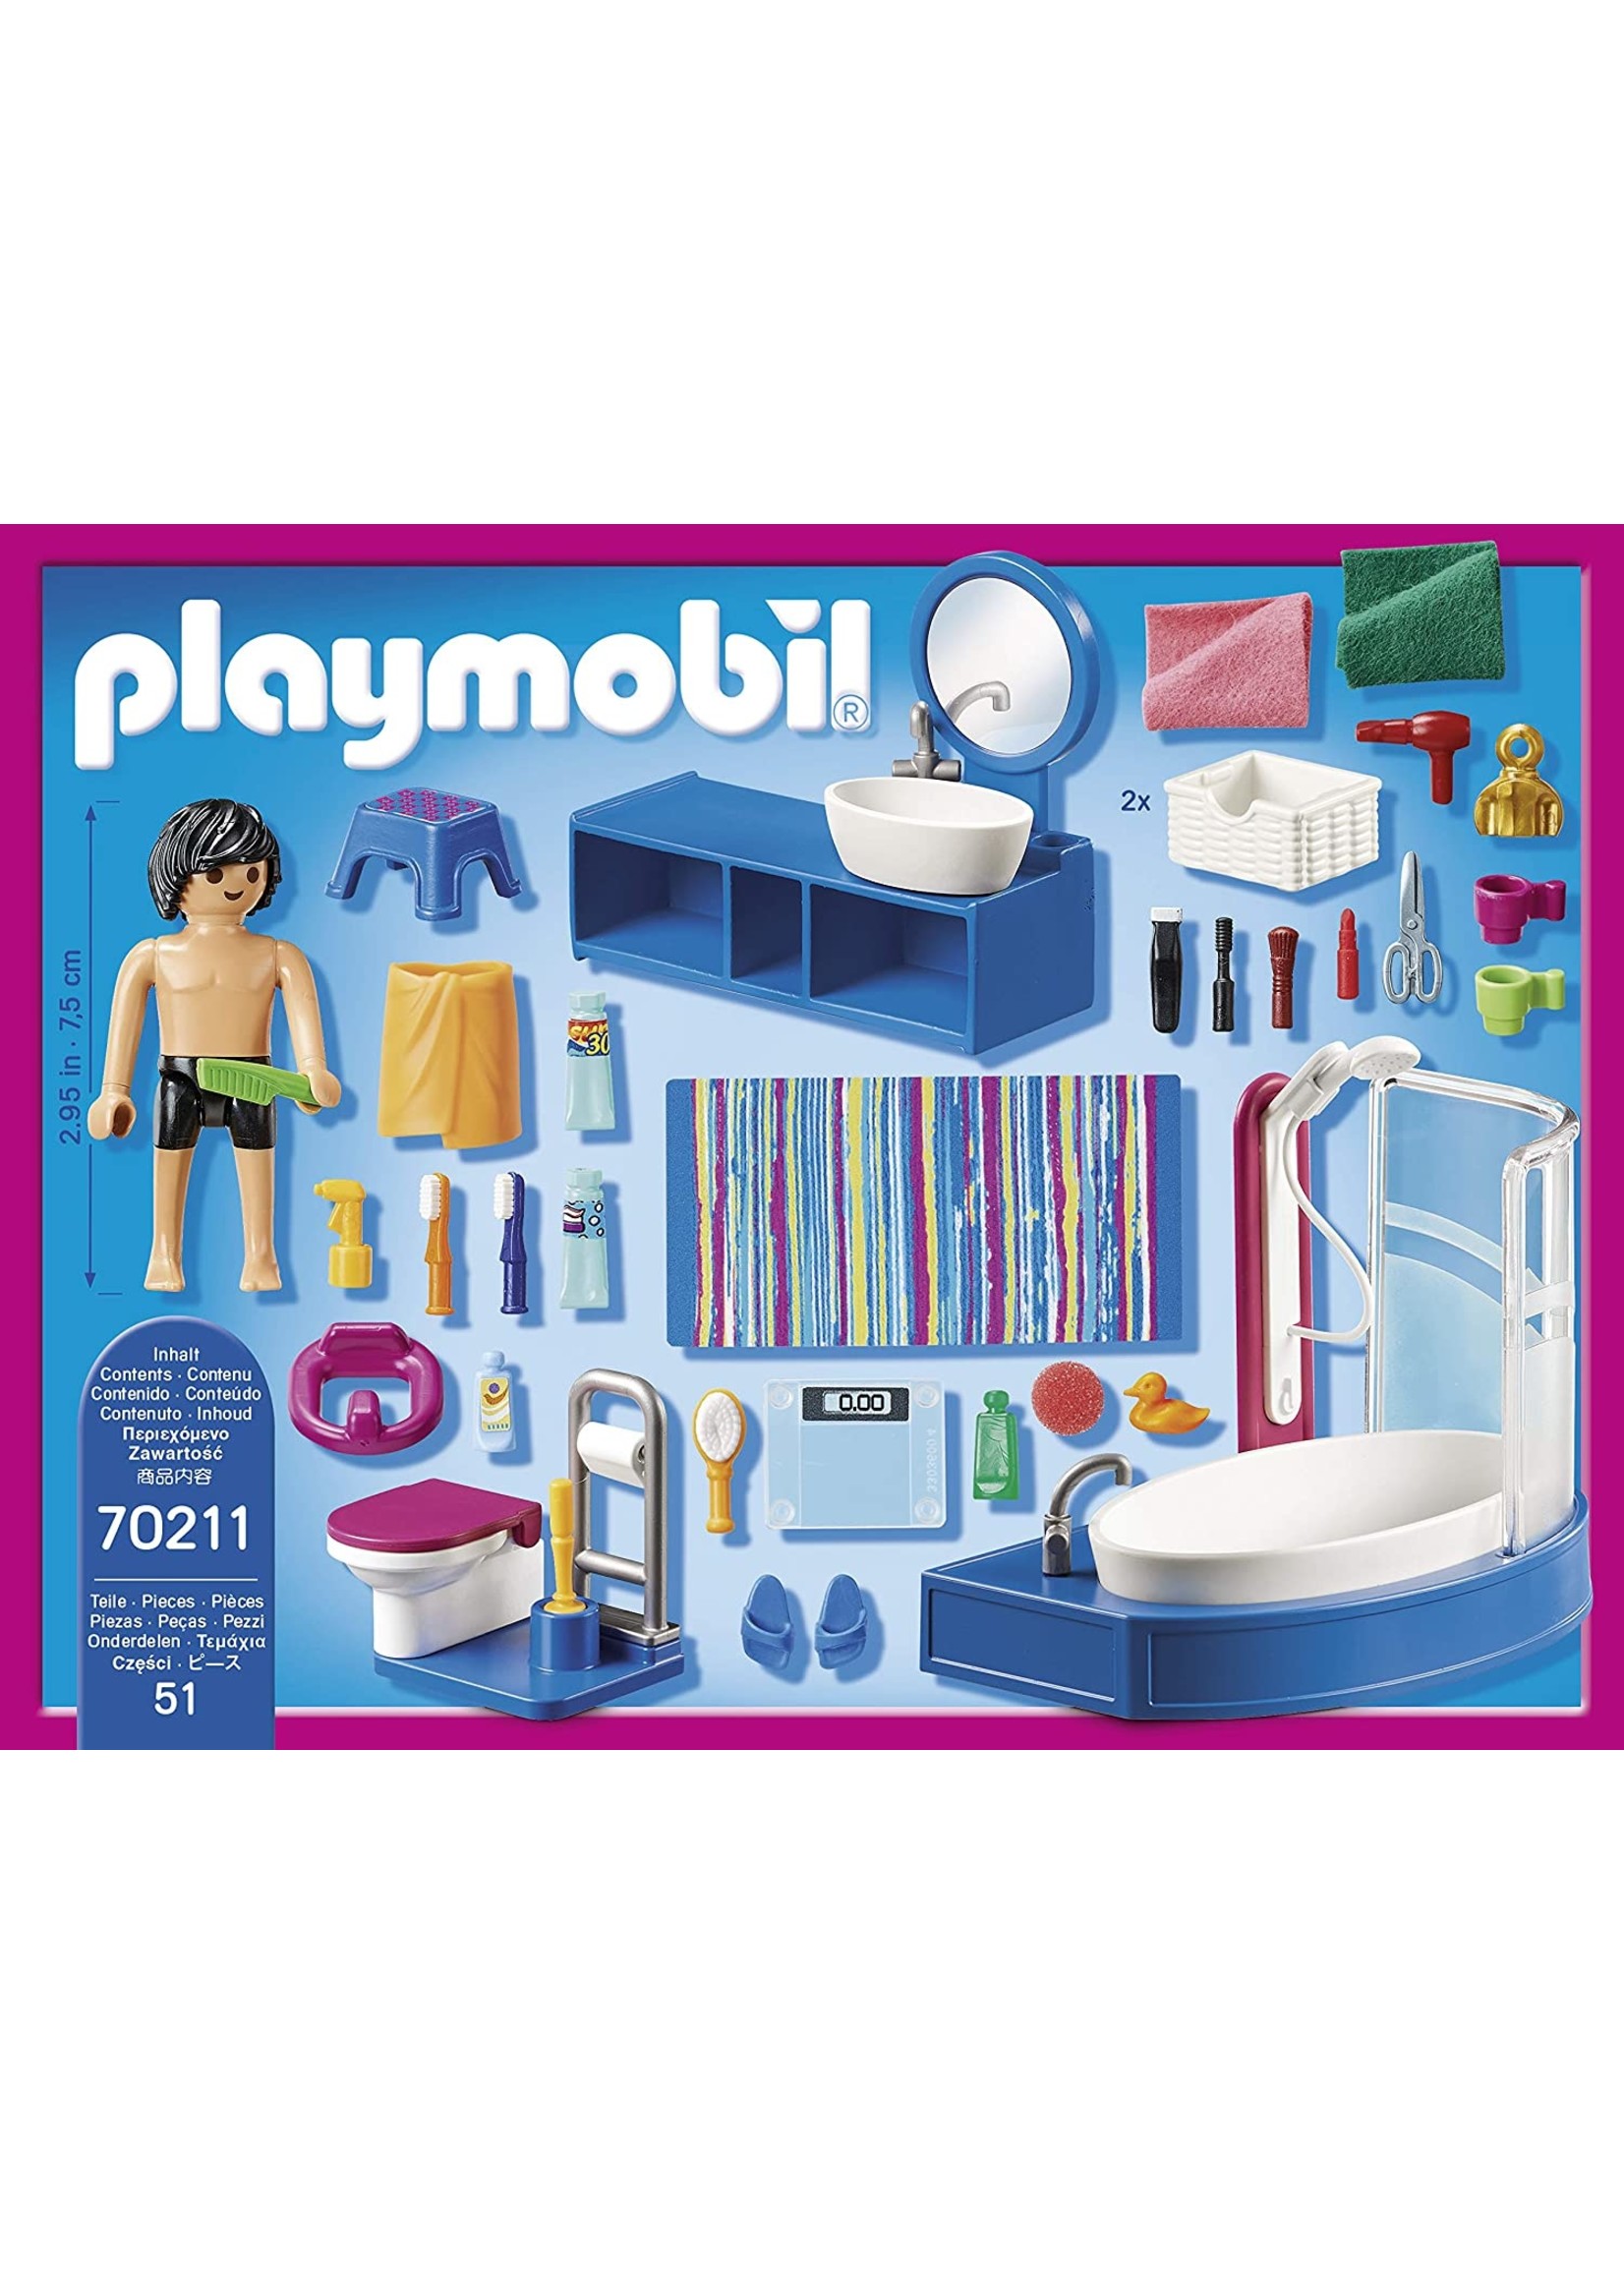 Playmobil 70211 - Bathroom with Tub